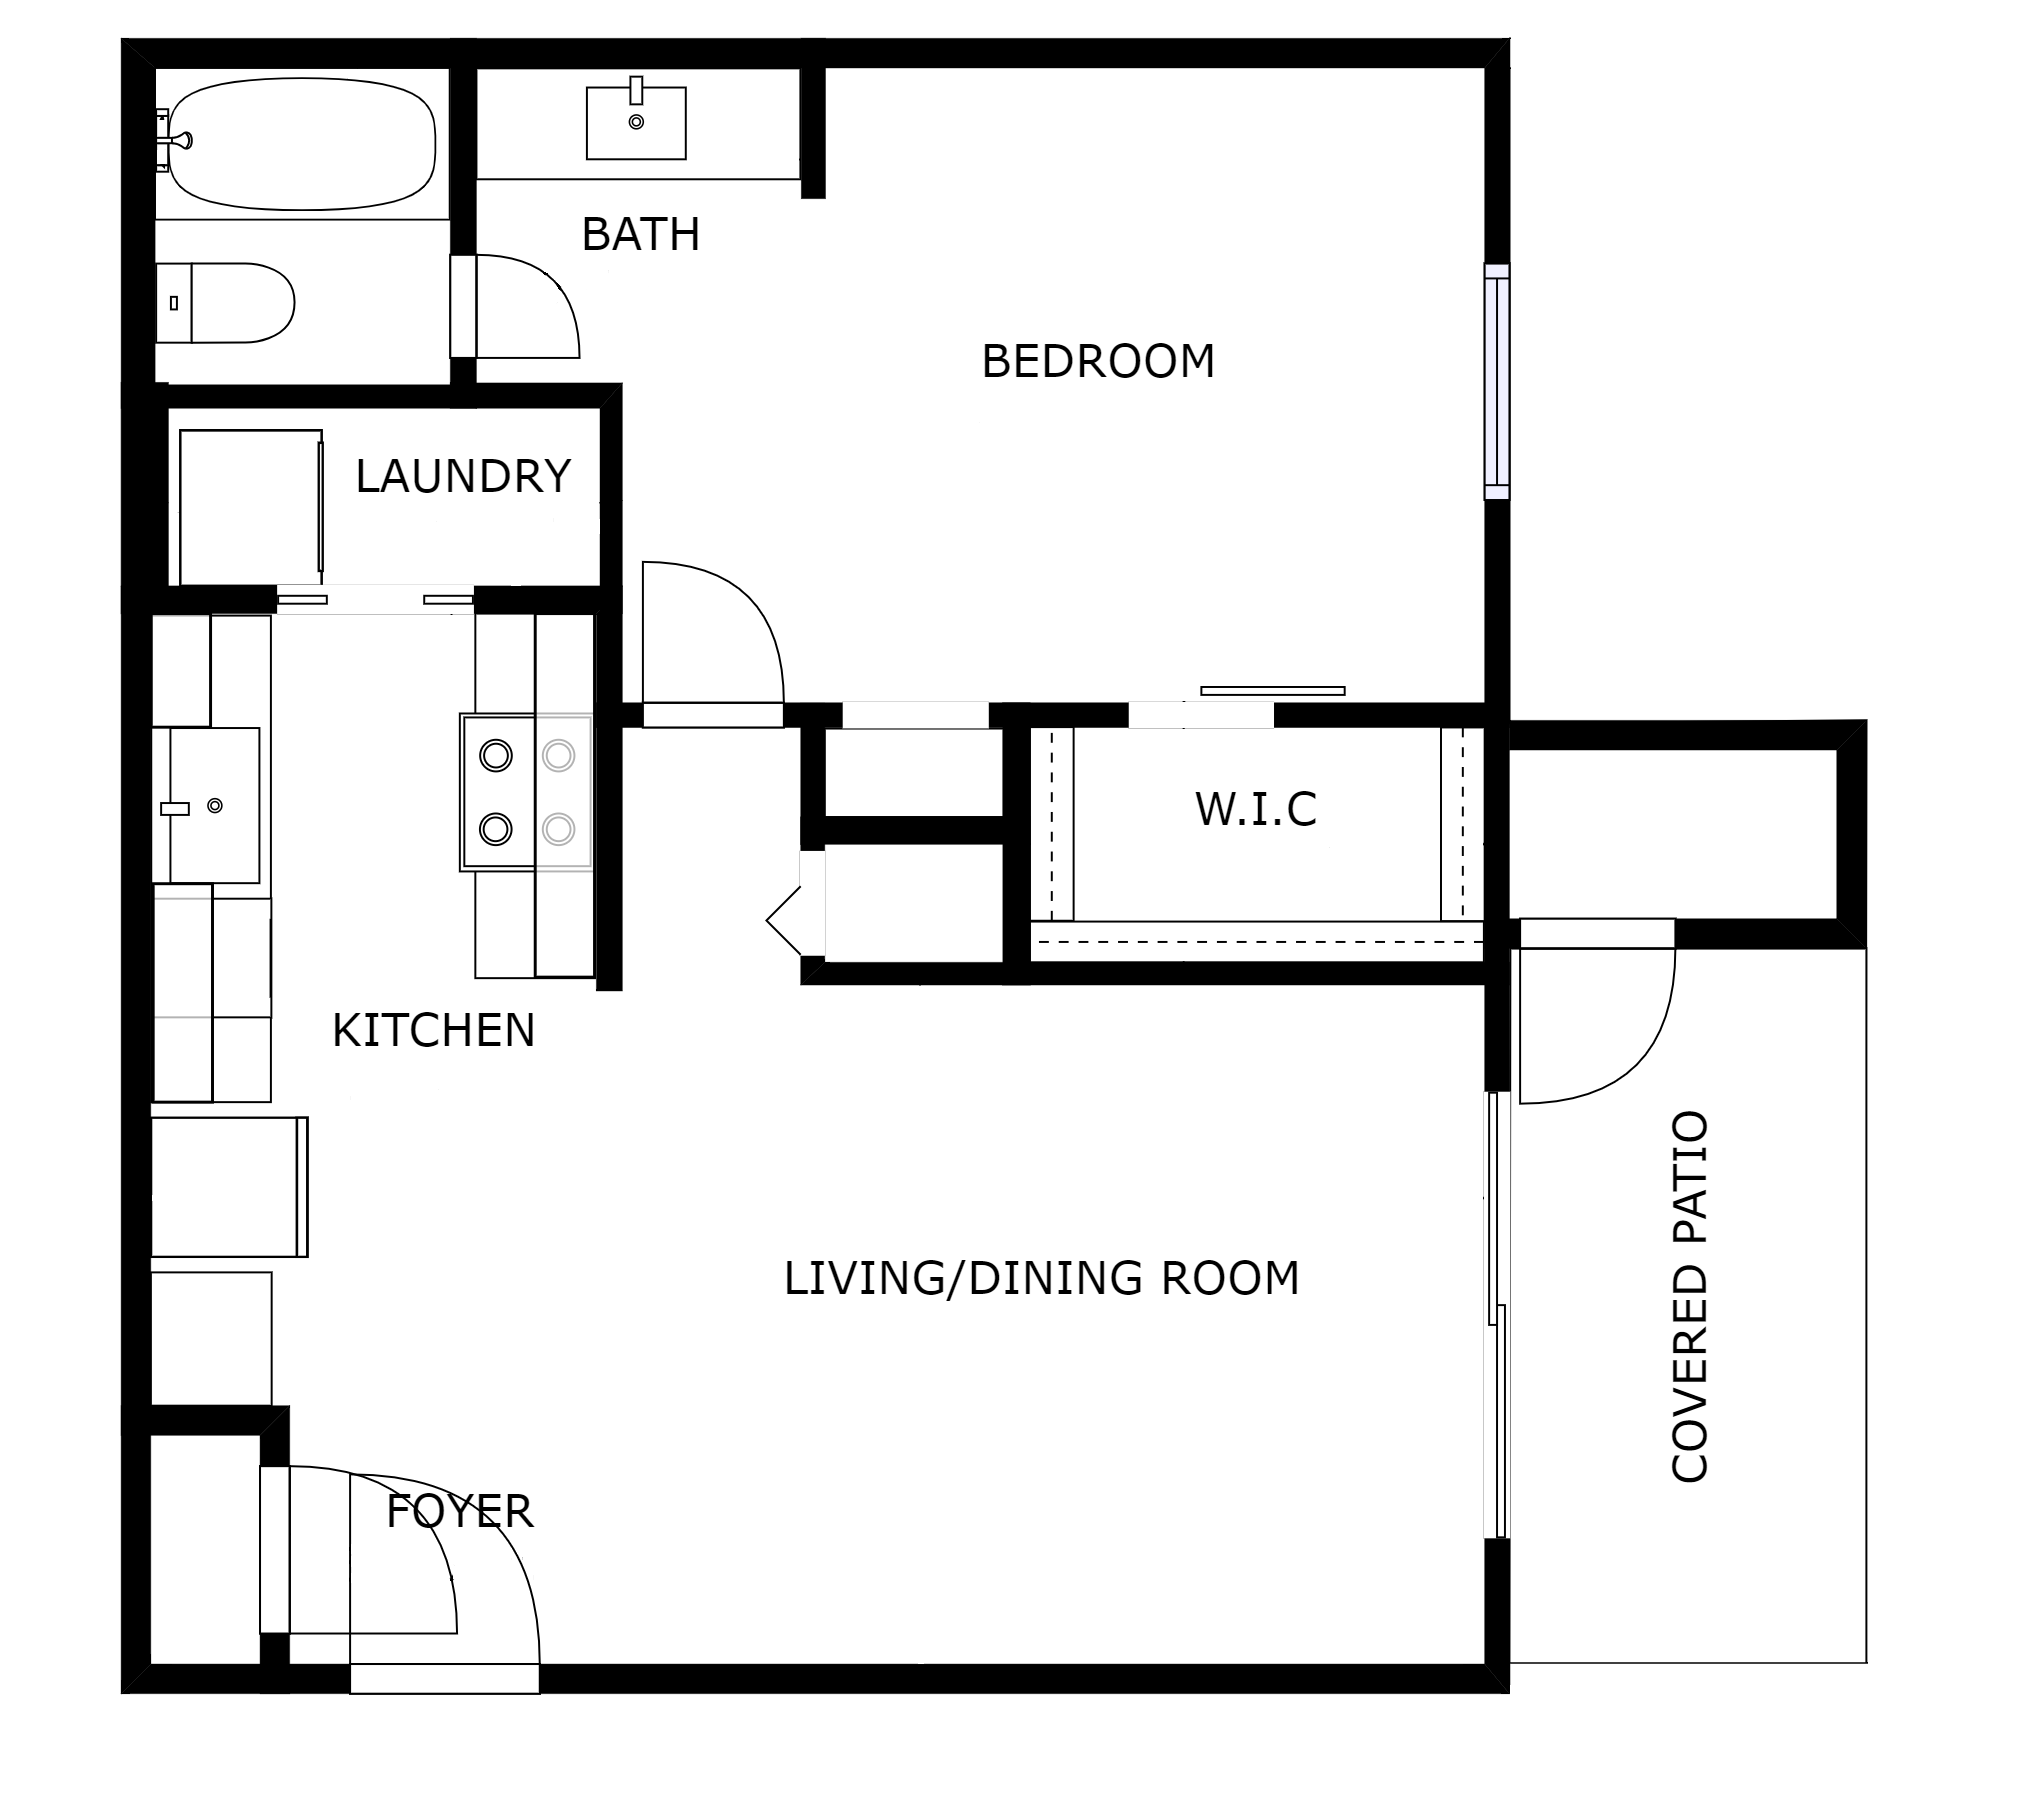 One bedroom floorplan